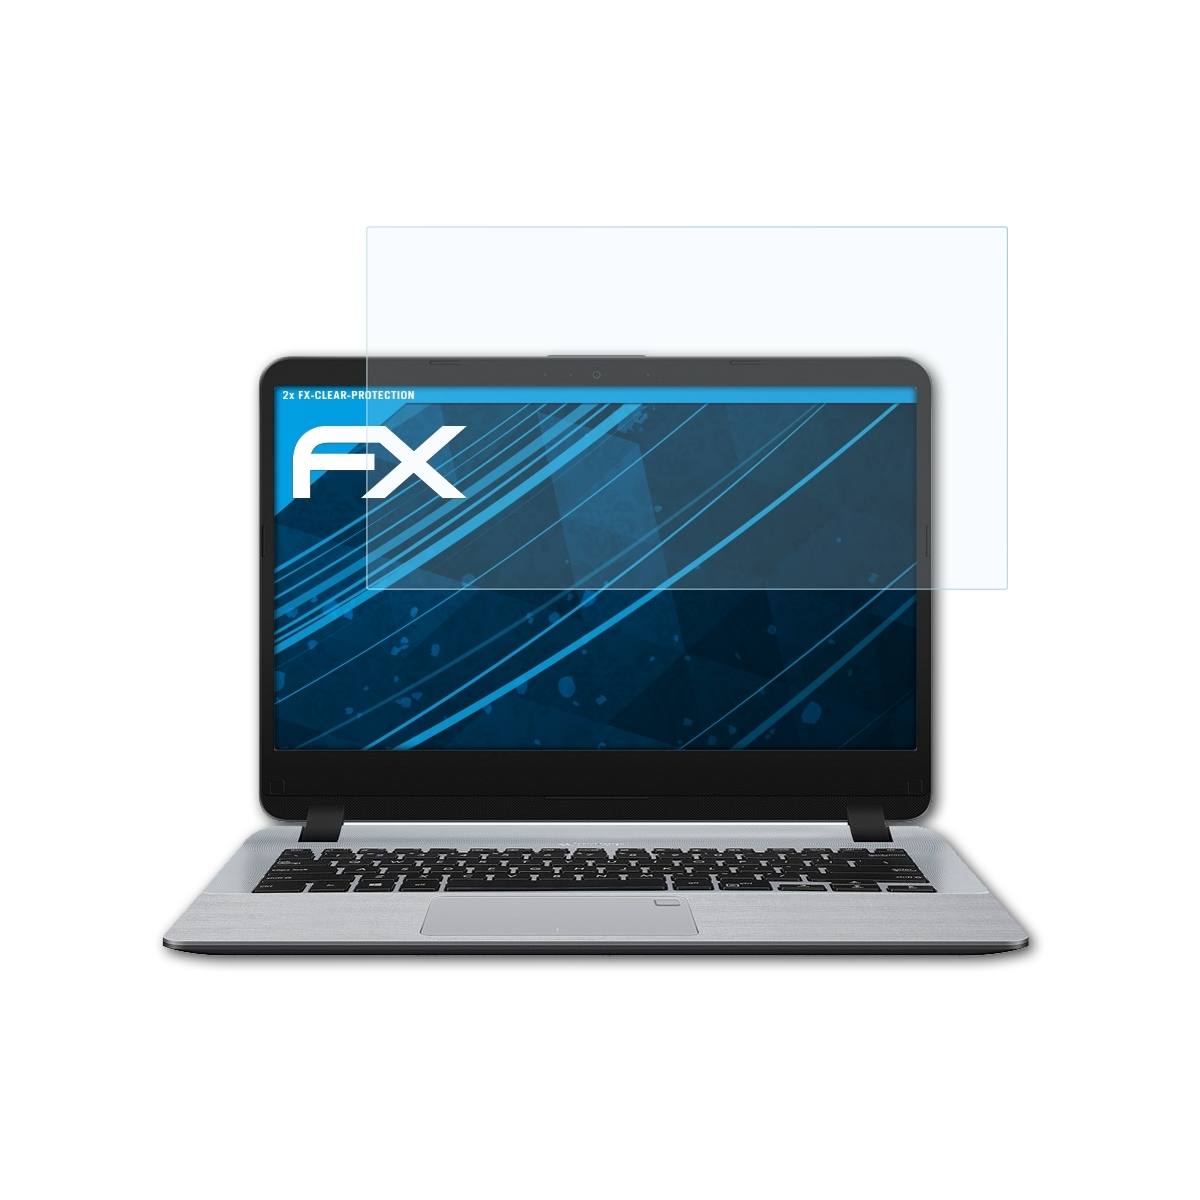 X407UA) Displayschutz(für Asus FX-Clear ATFOLIX 2x Laptop